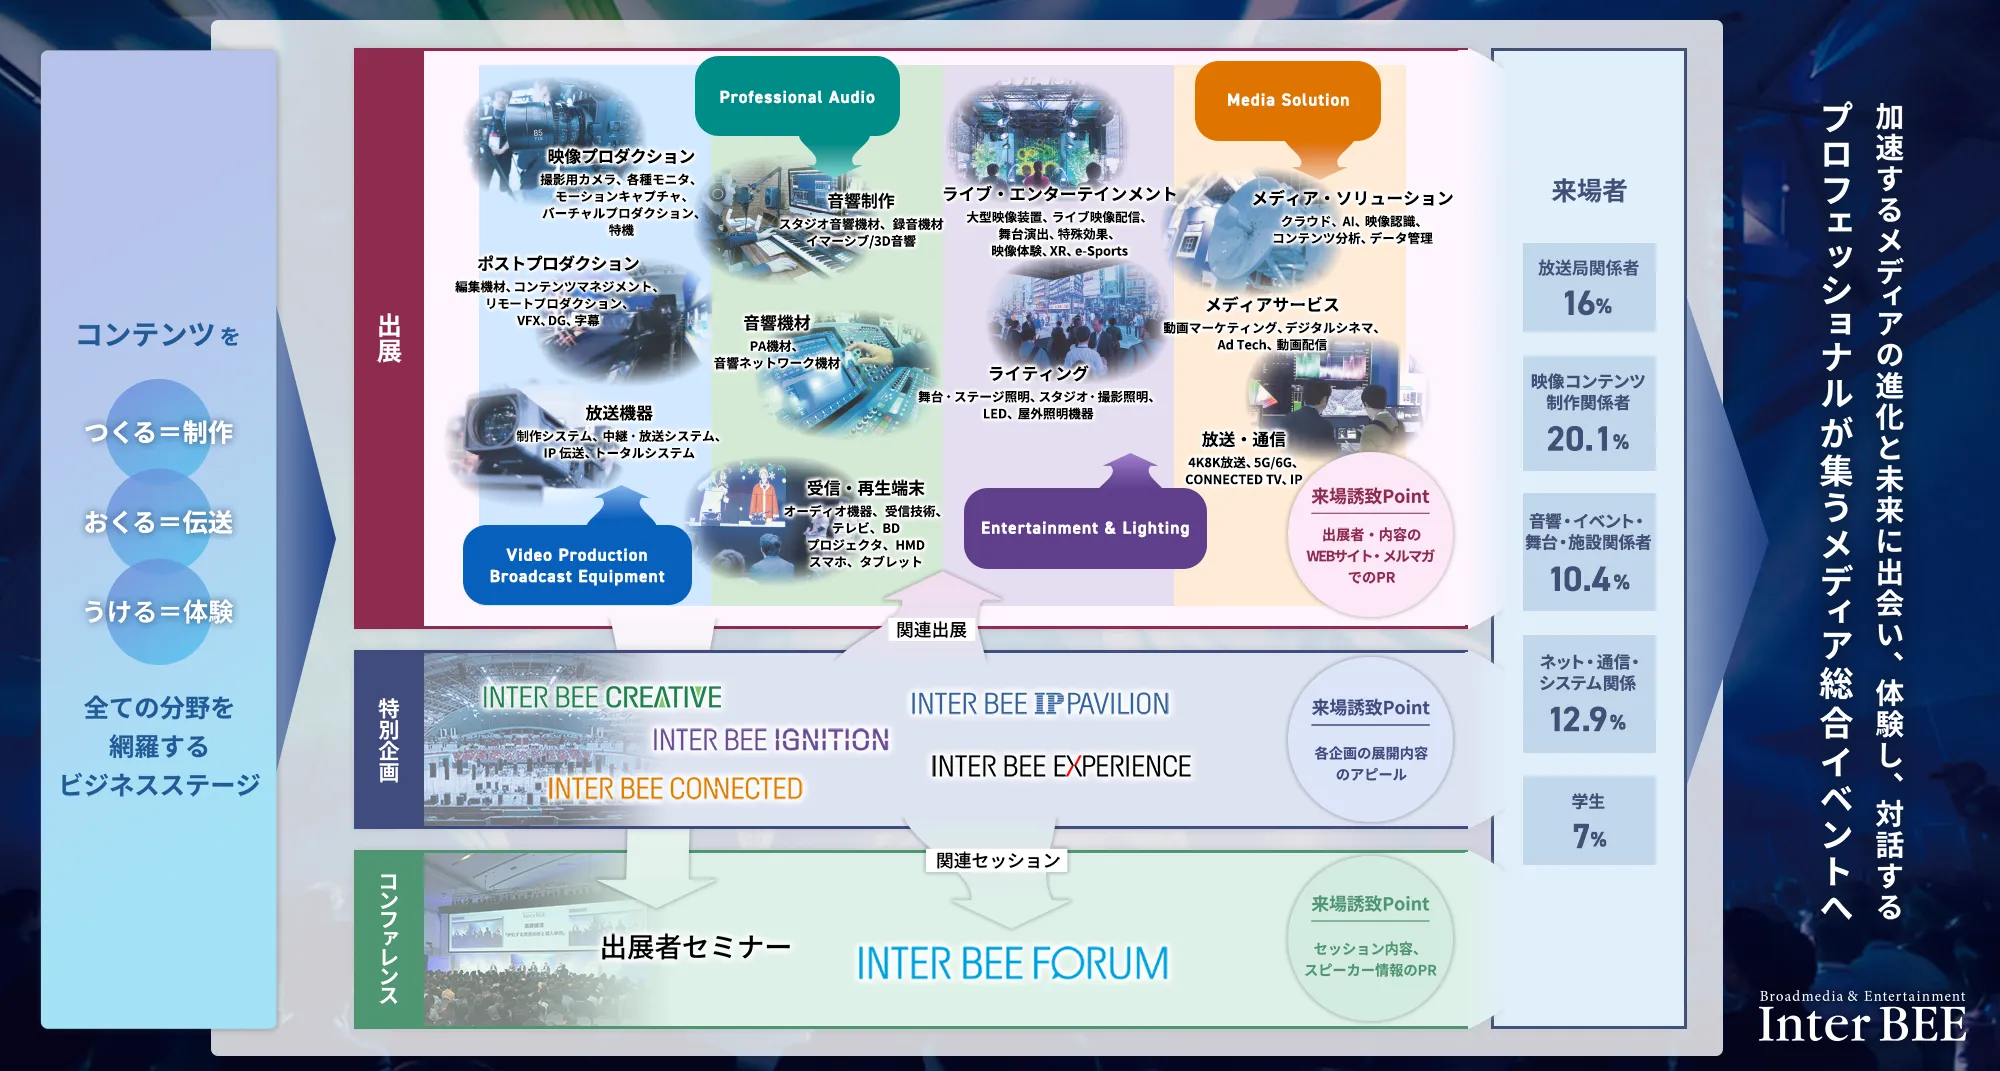 Inter BEE 参画要素構成図